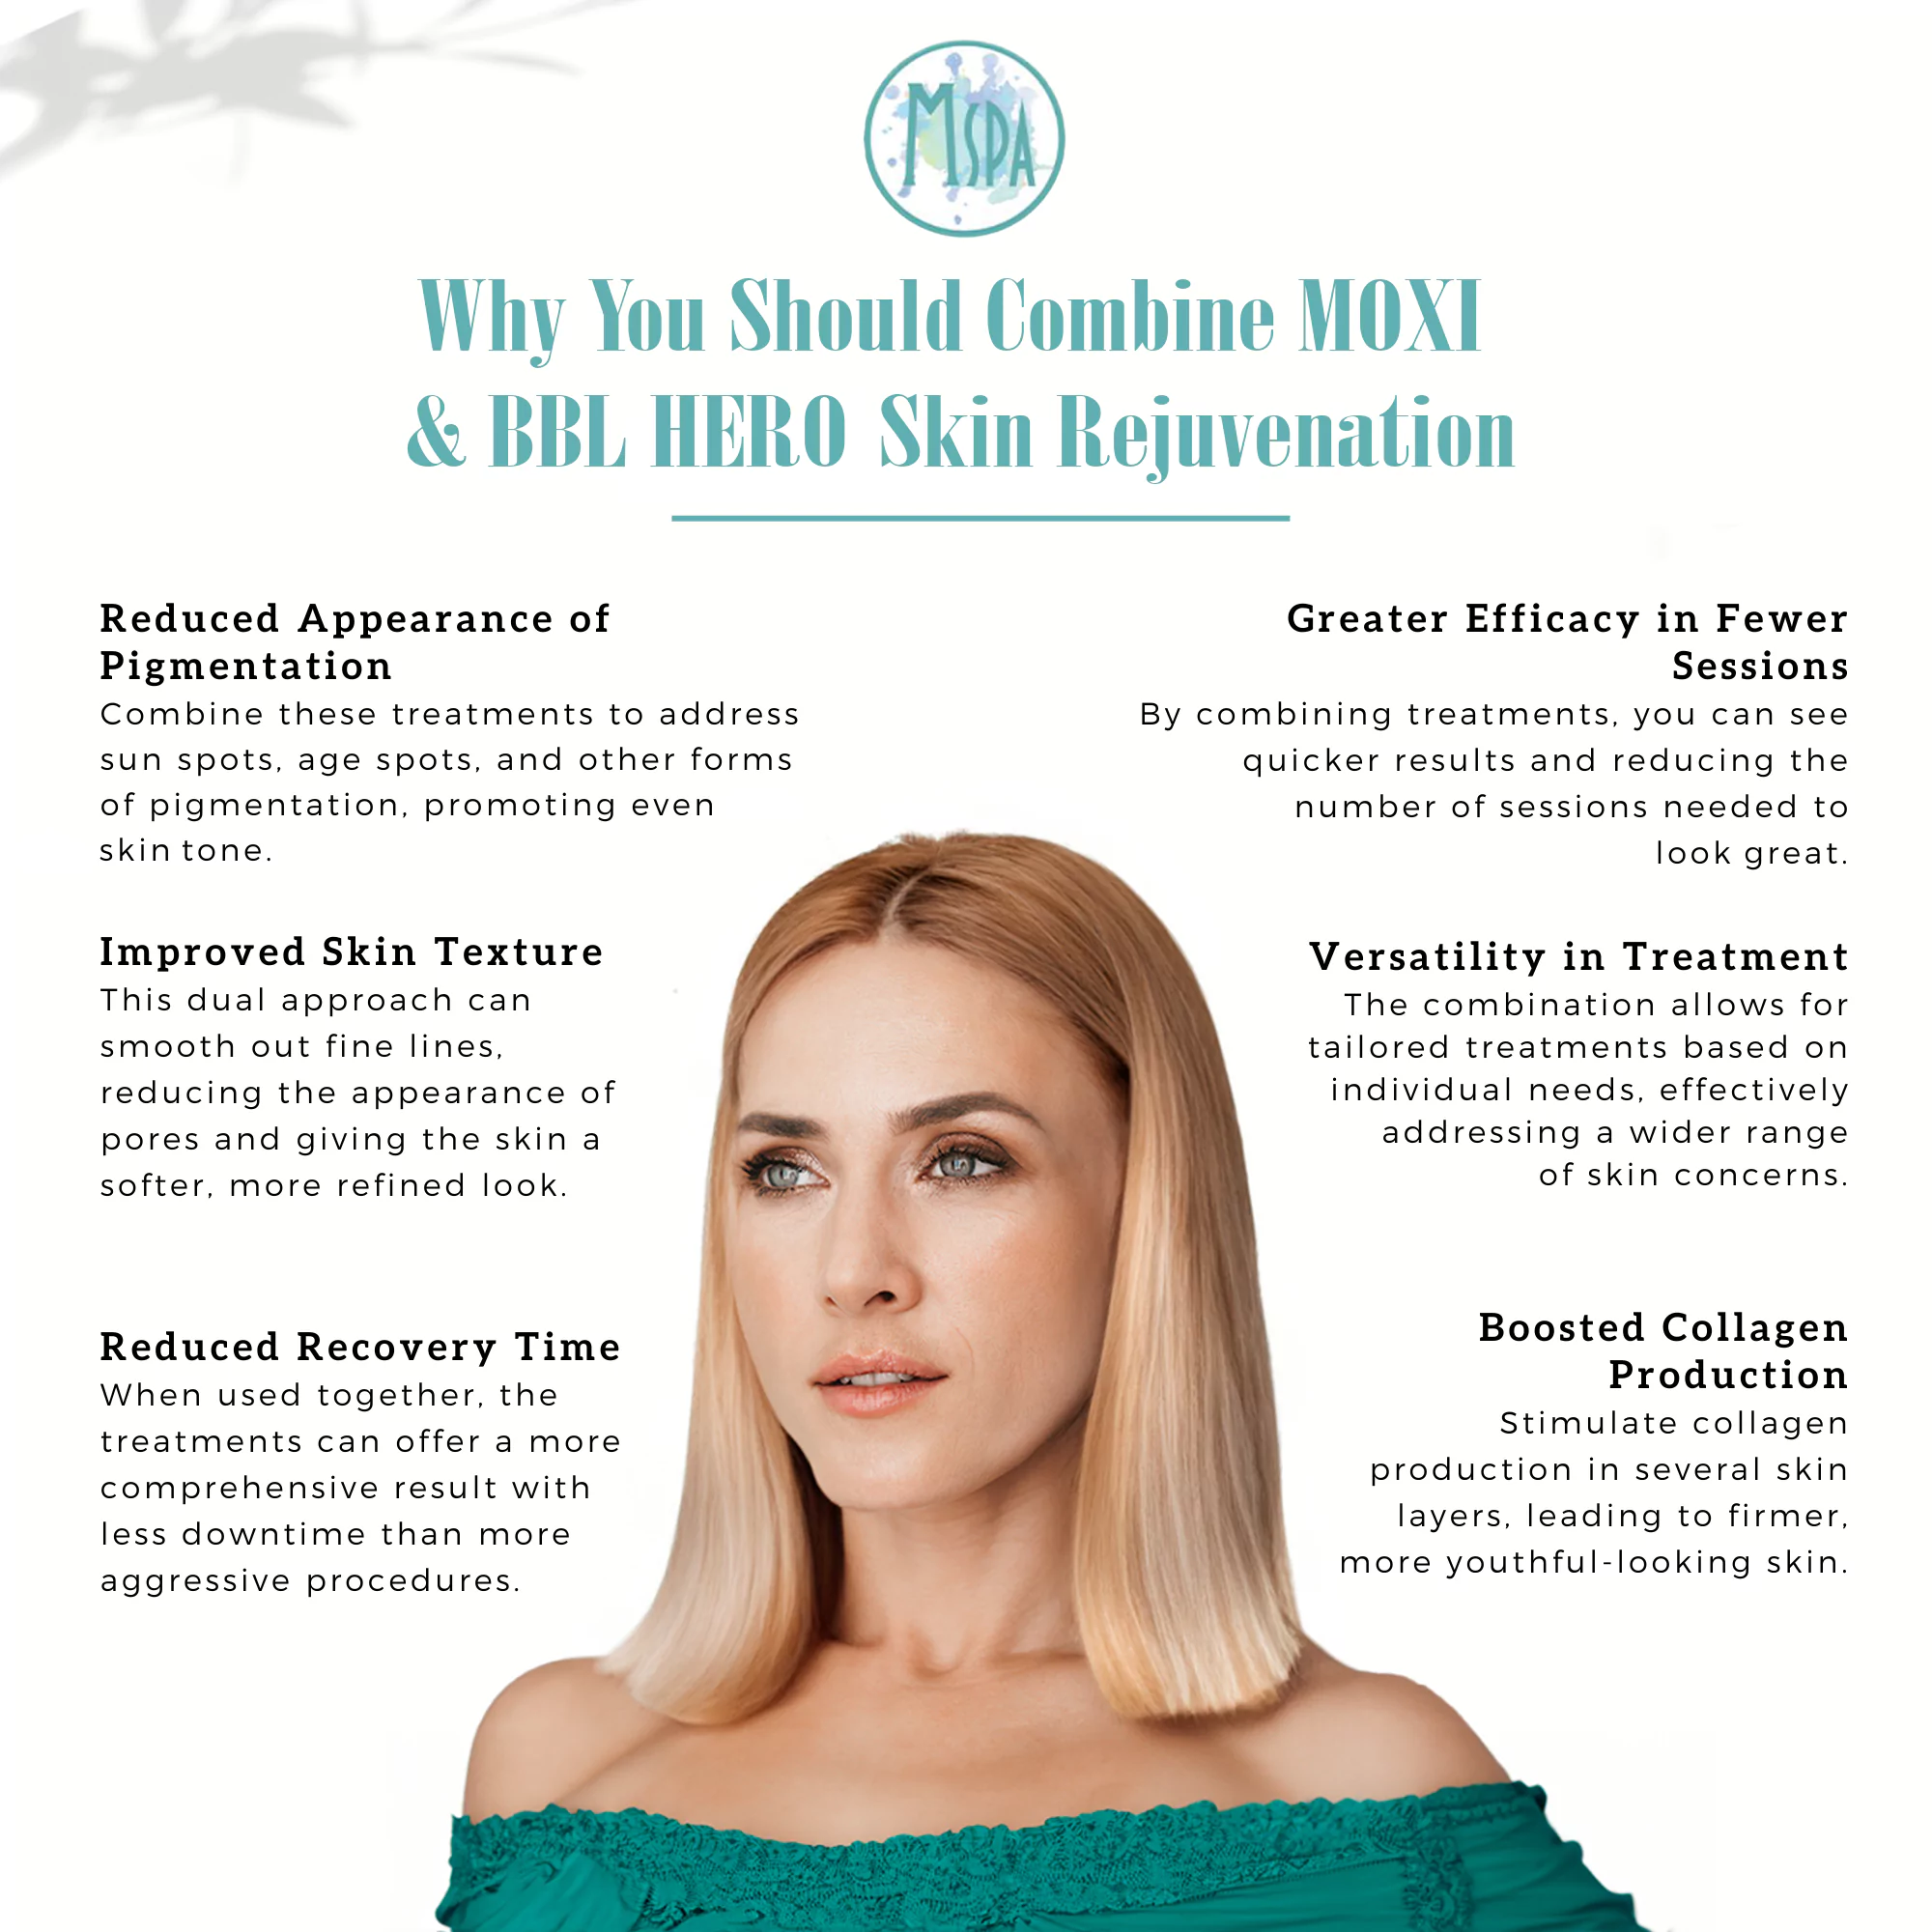 Why You Should Combine MOXI & BBL HERO Skin Rejuvenation